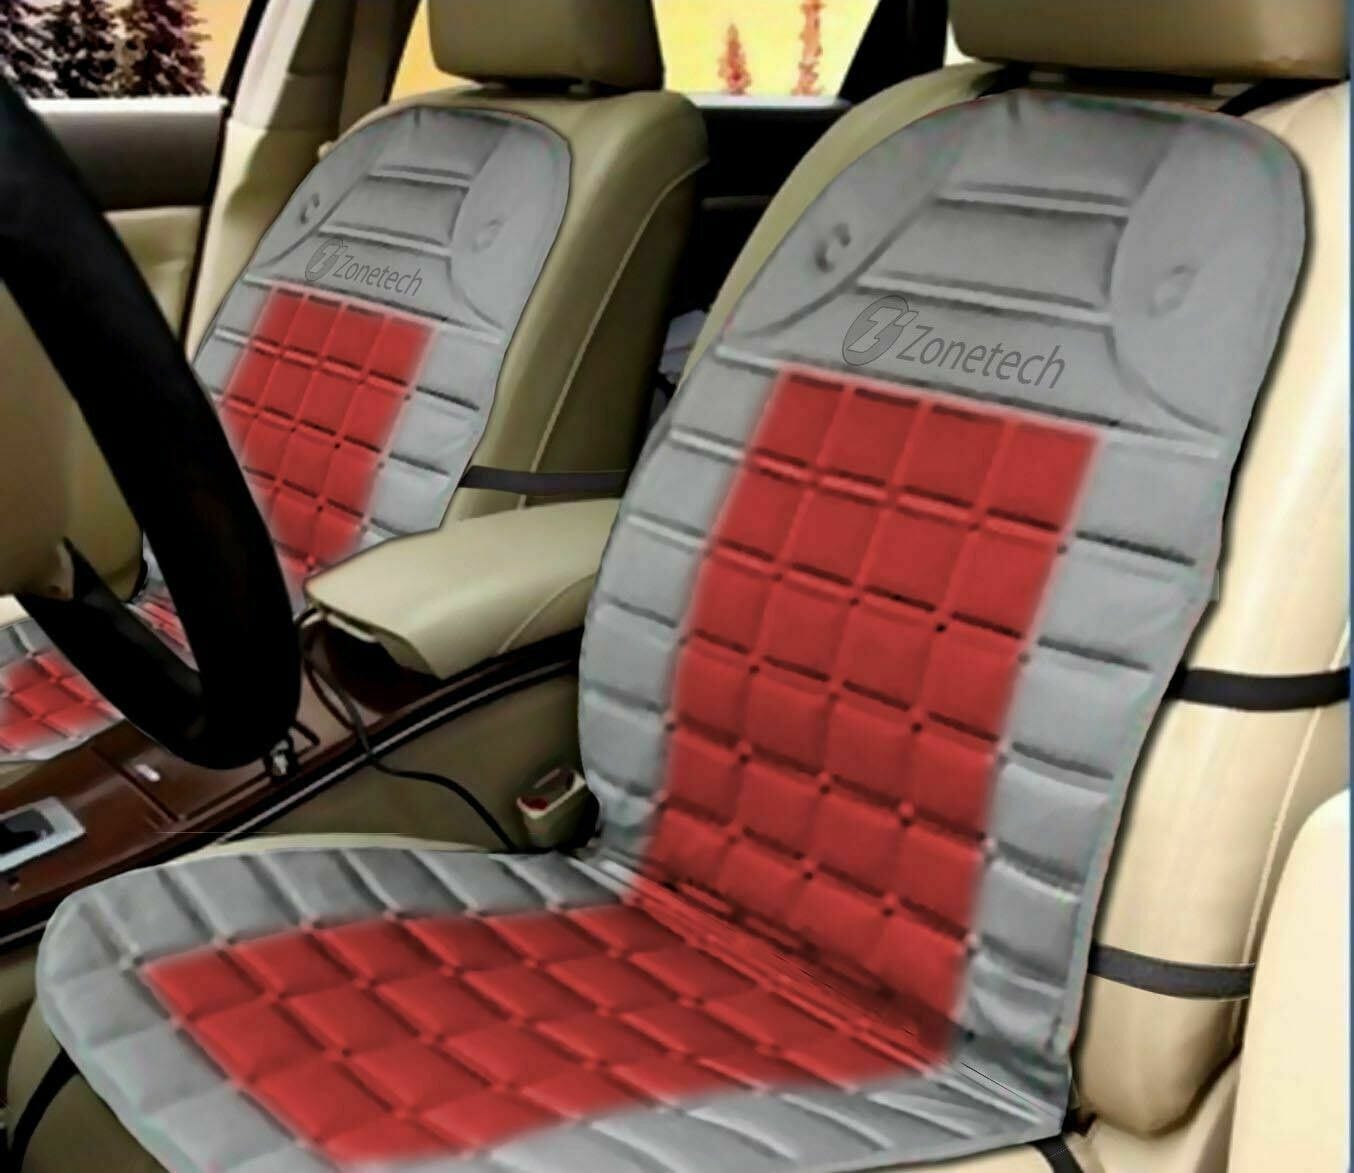 Heated Car Seat Cushion Warmer Cover Pad - Merchandise Plug